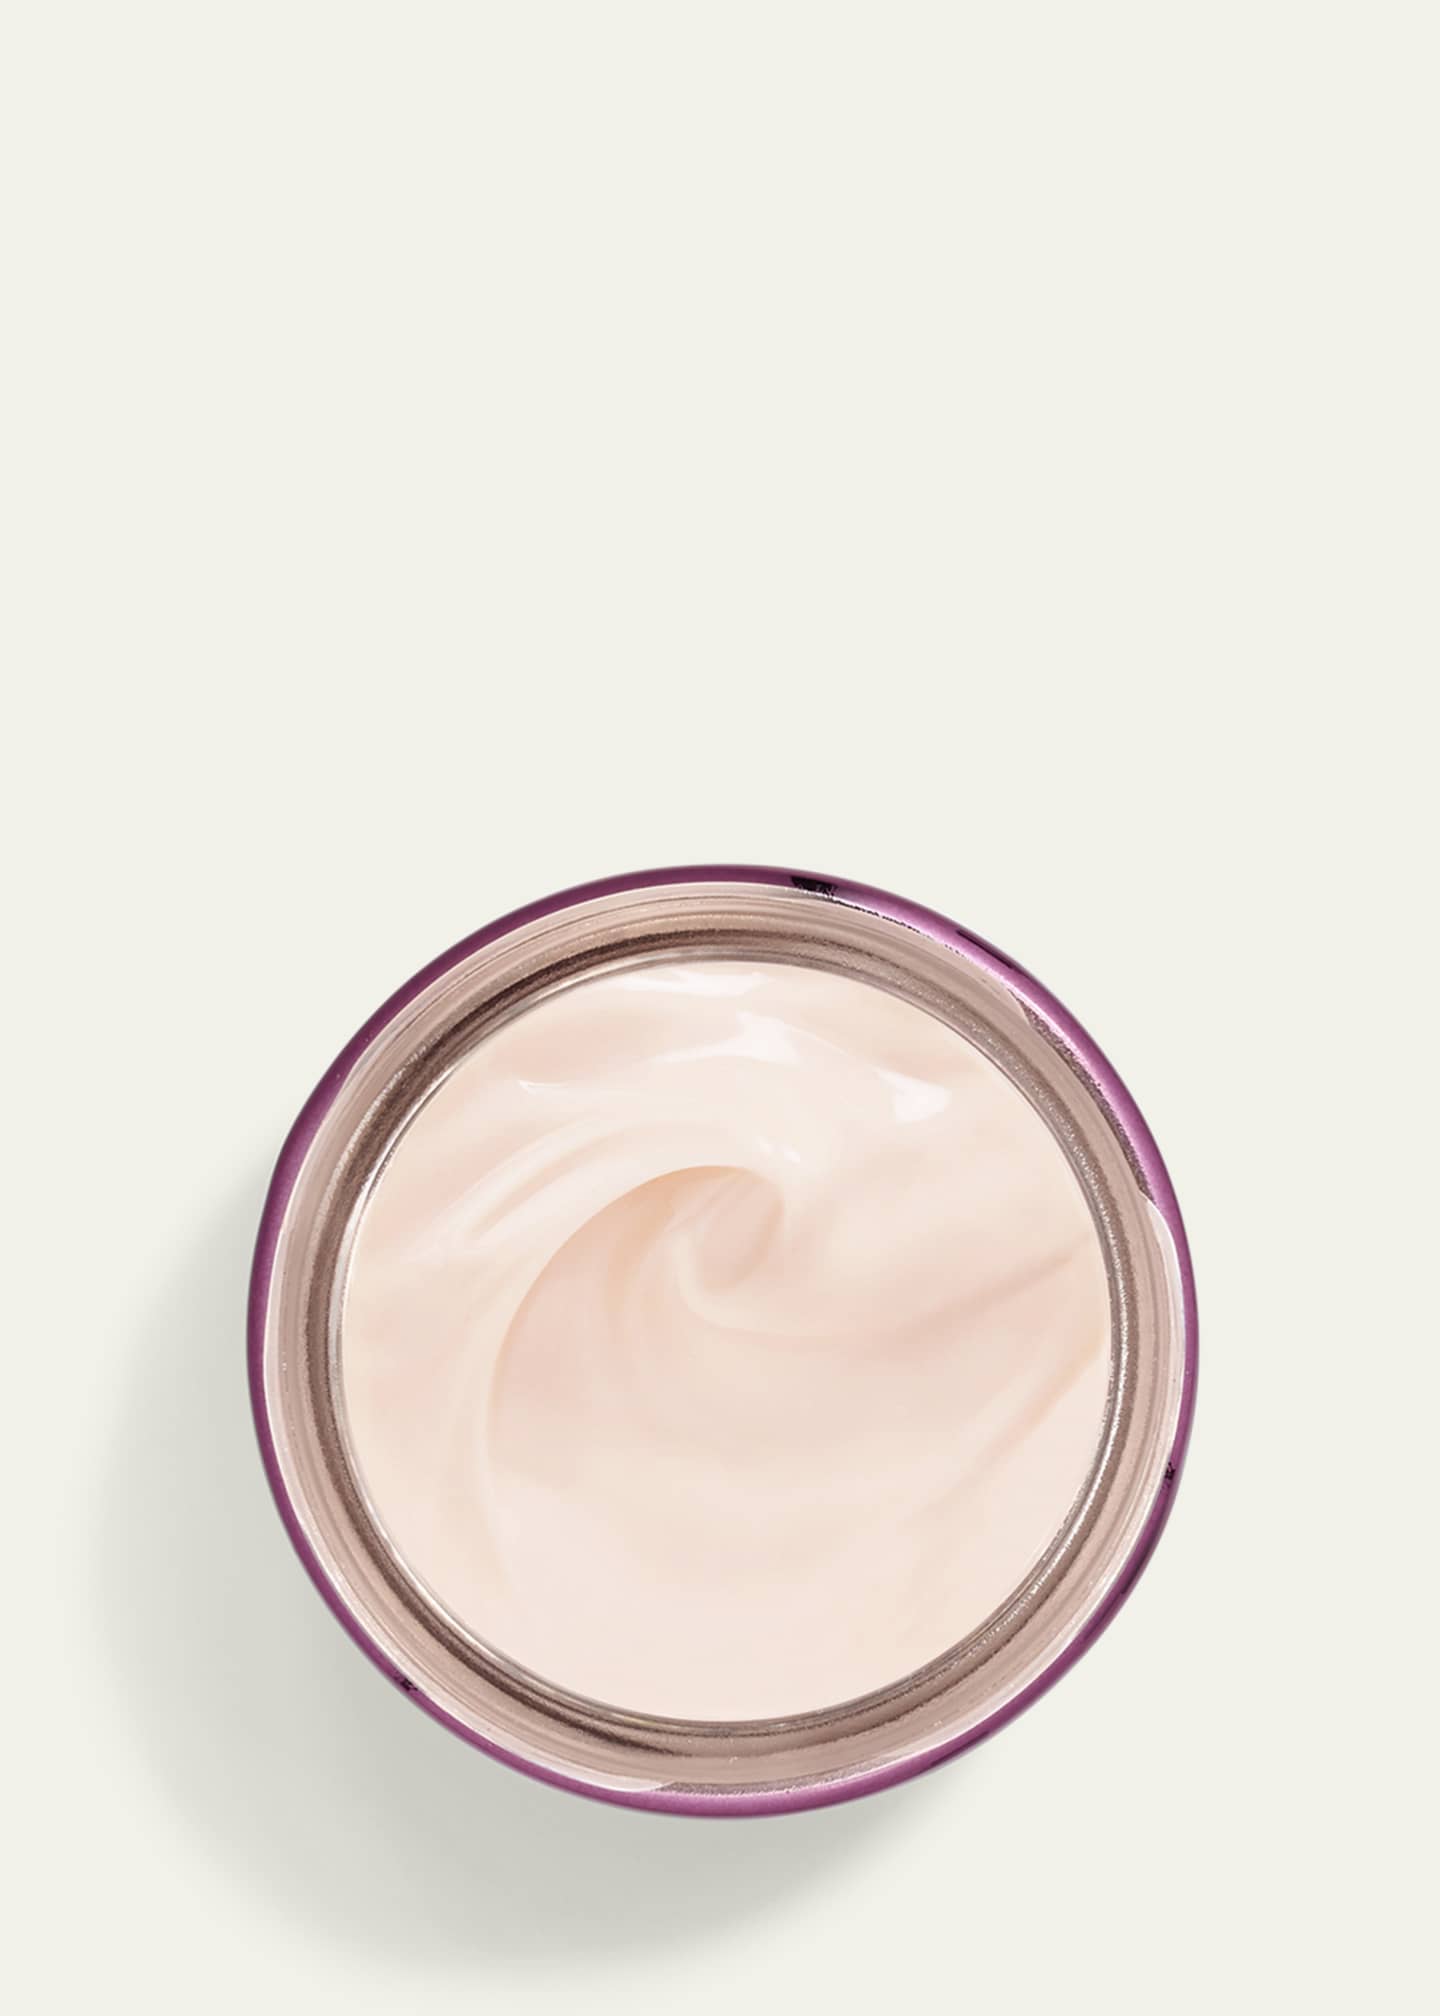 Sisley-Paris Black Rose Skin Infusion Cream Image 2 of 4